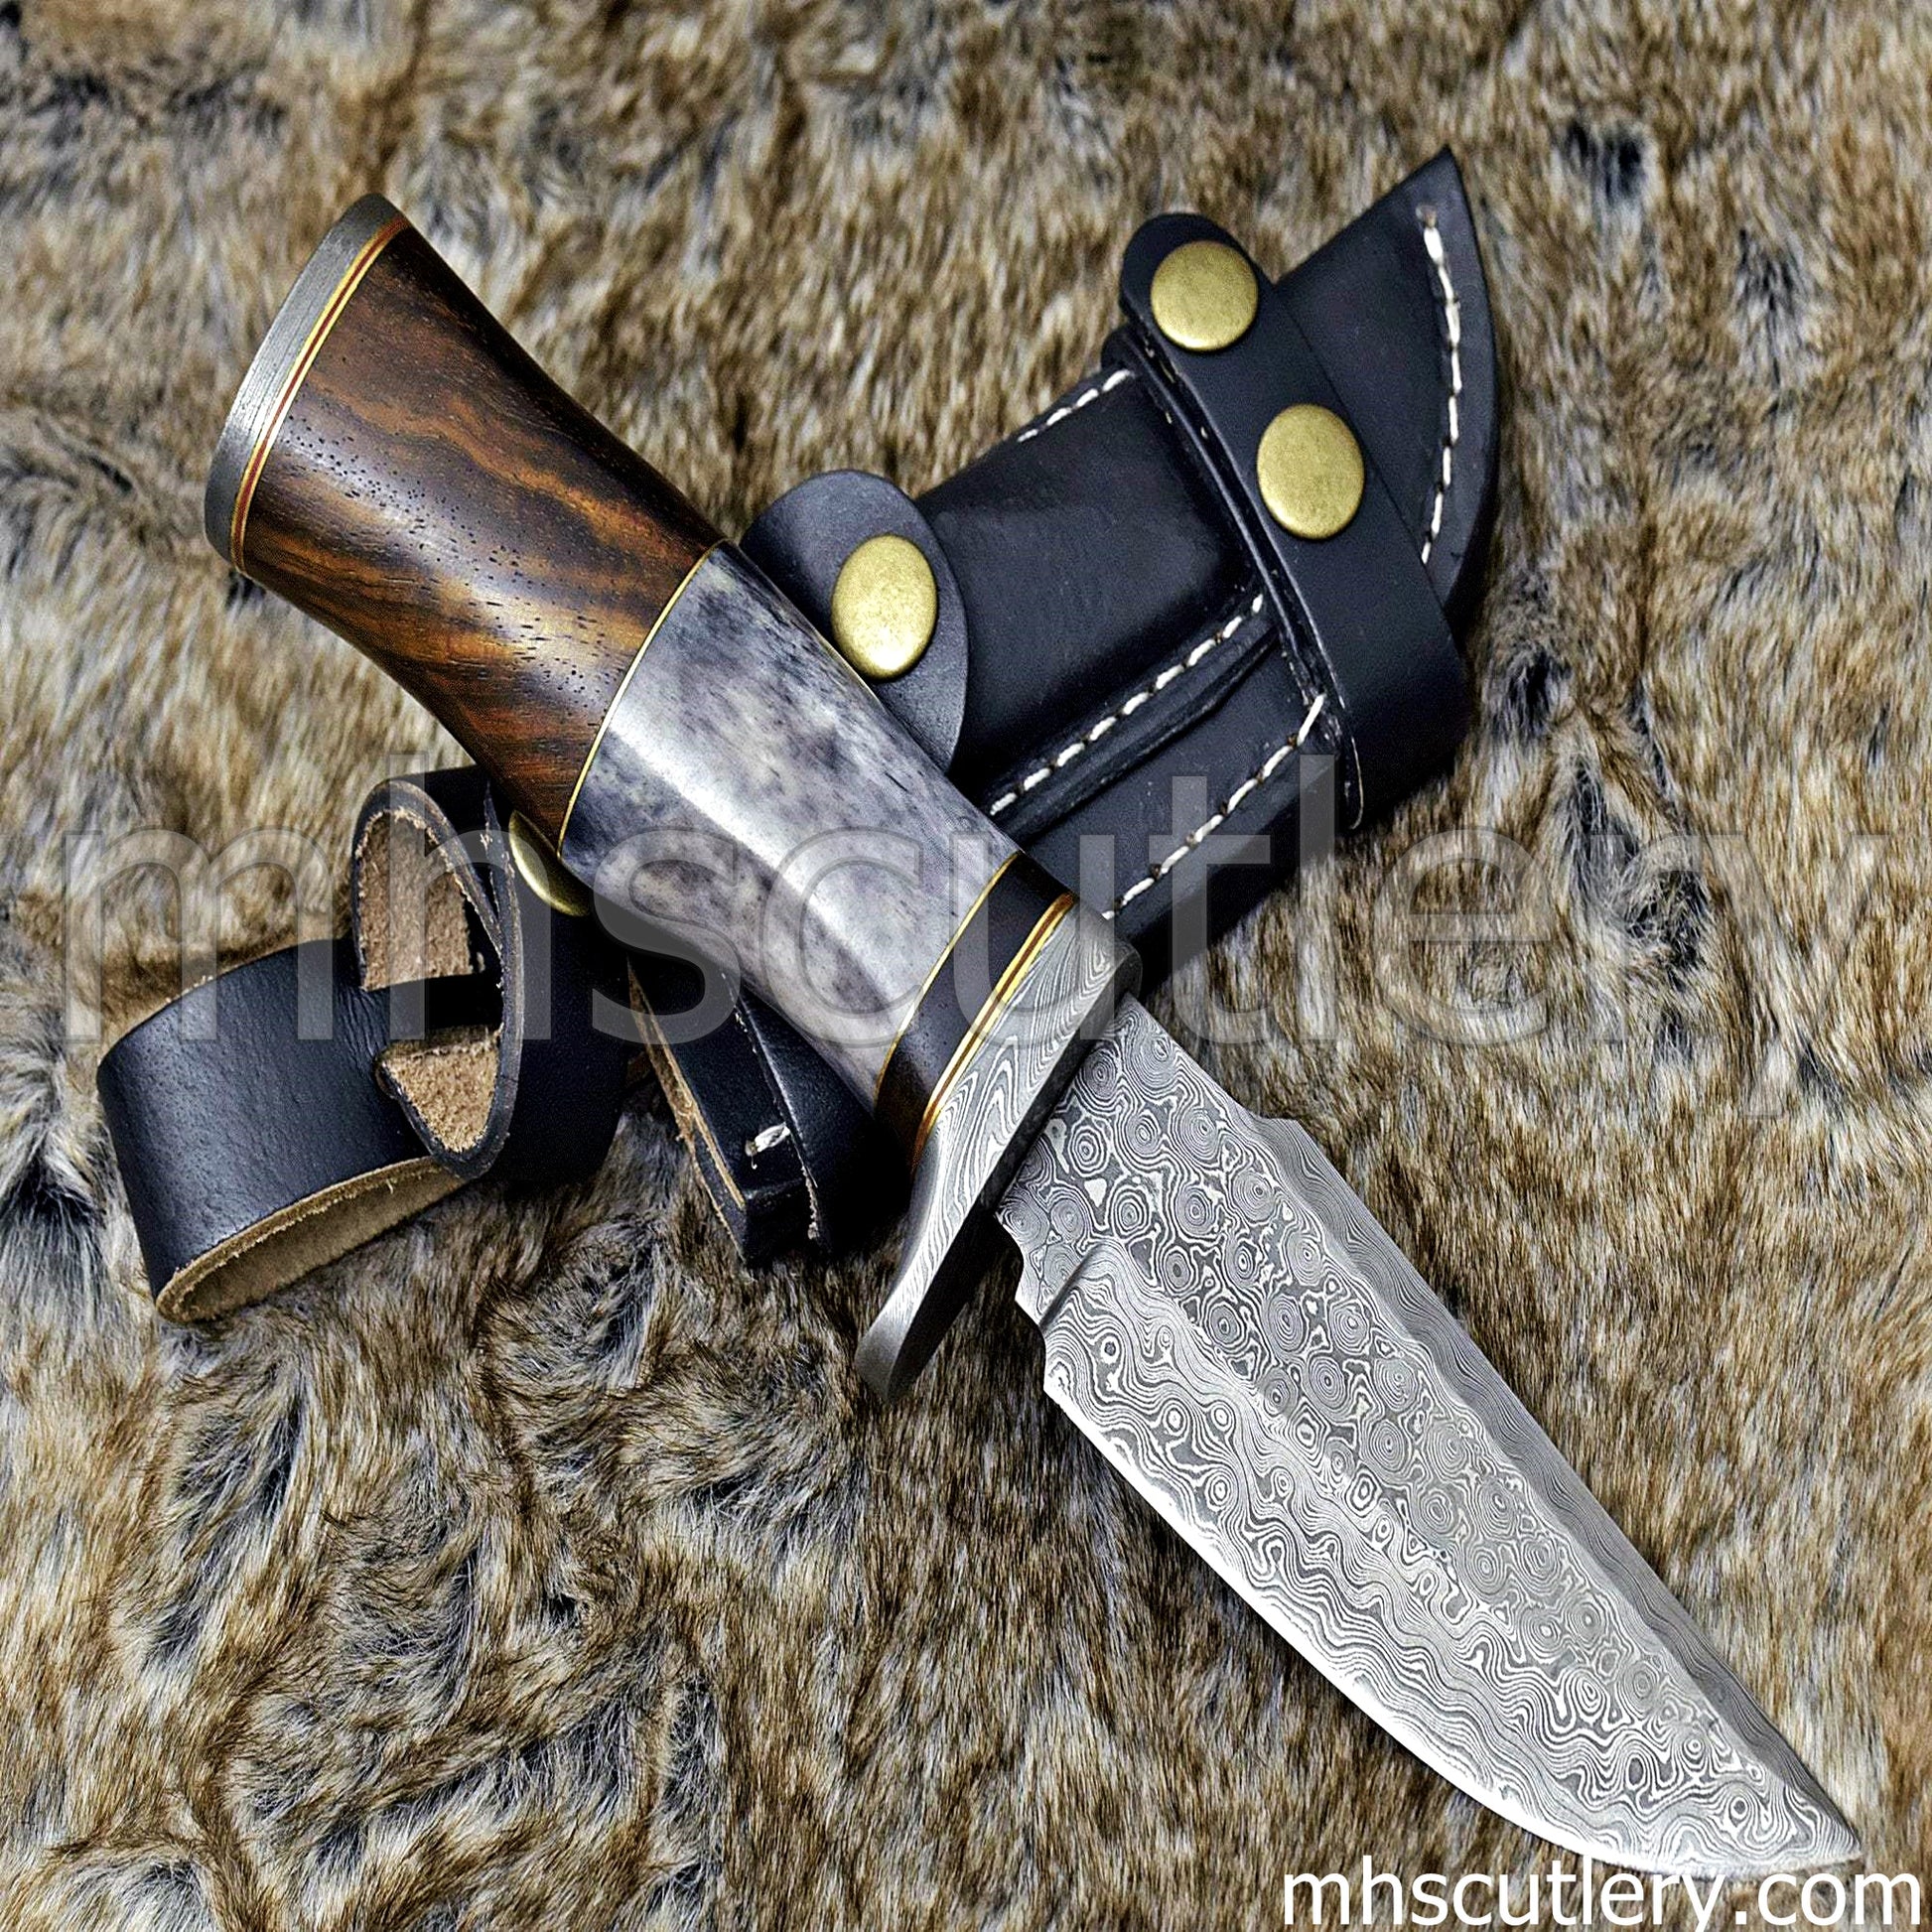 Custom Hand Forged Raindrop Damascus Steel Hunting Knife | mhscutlery